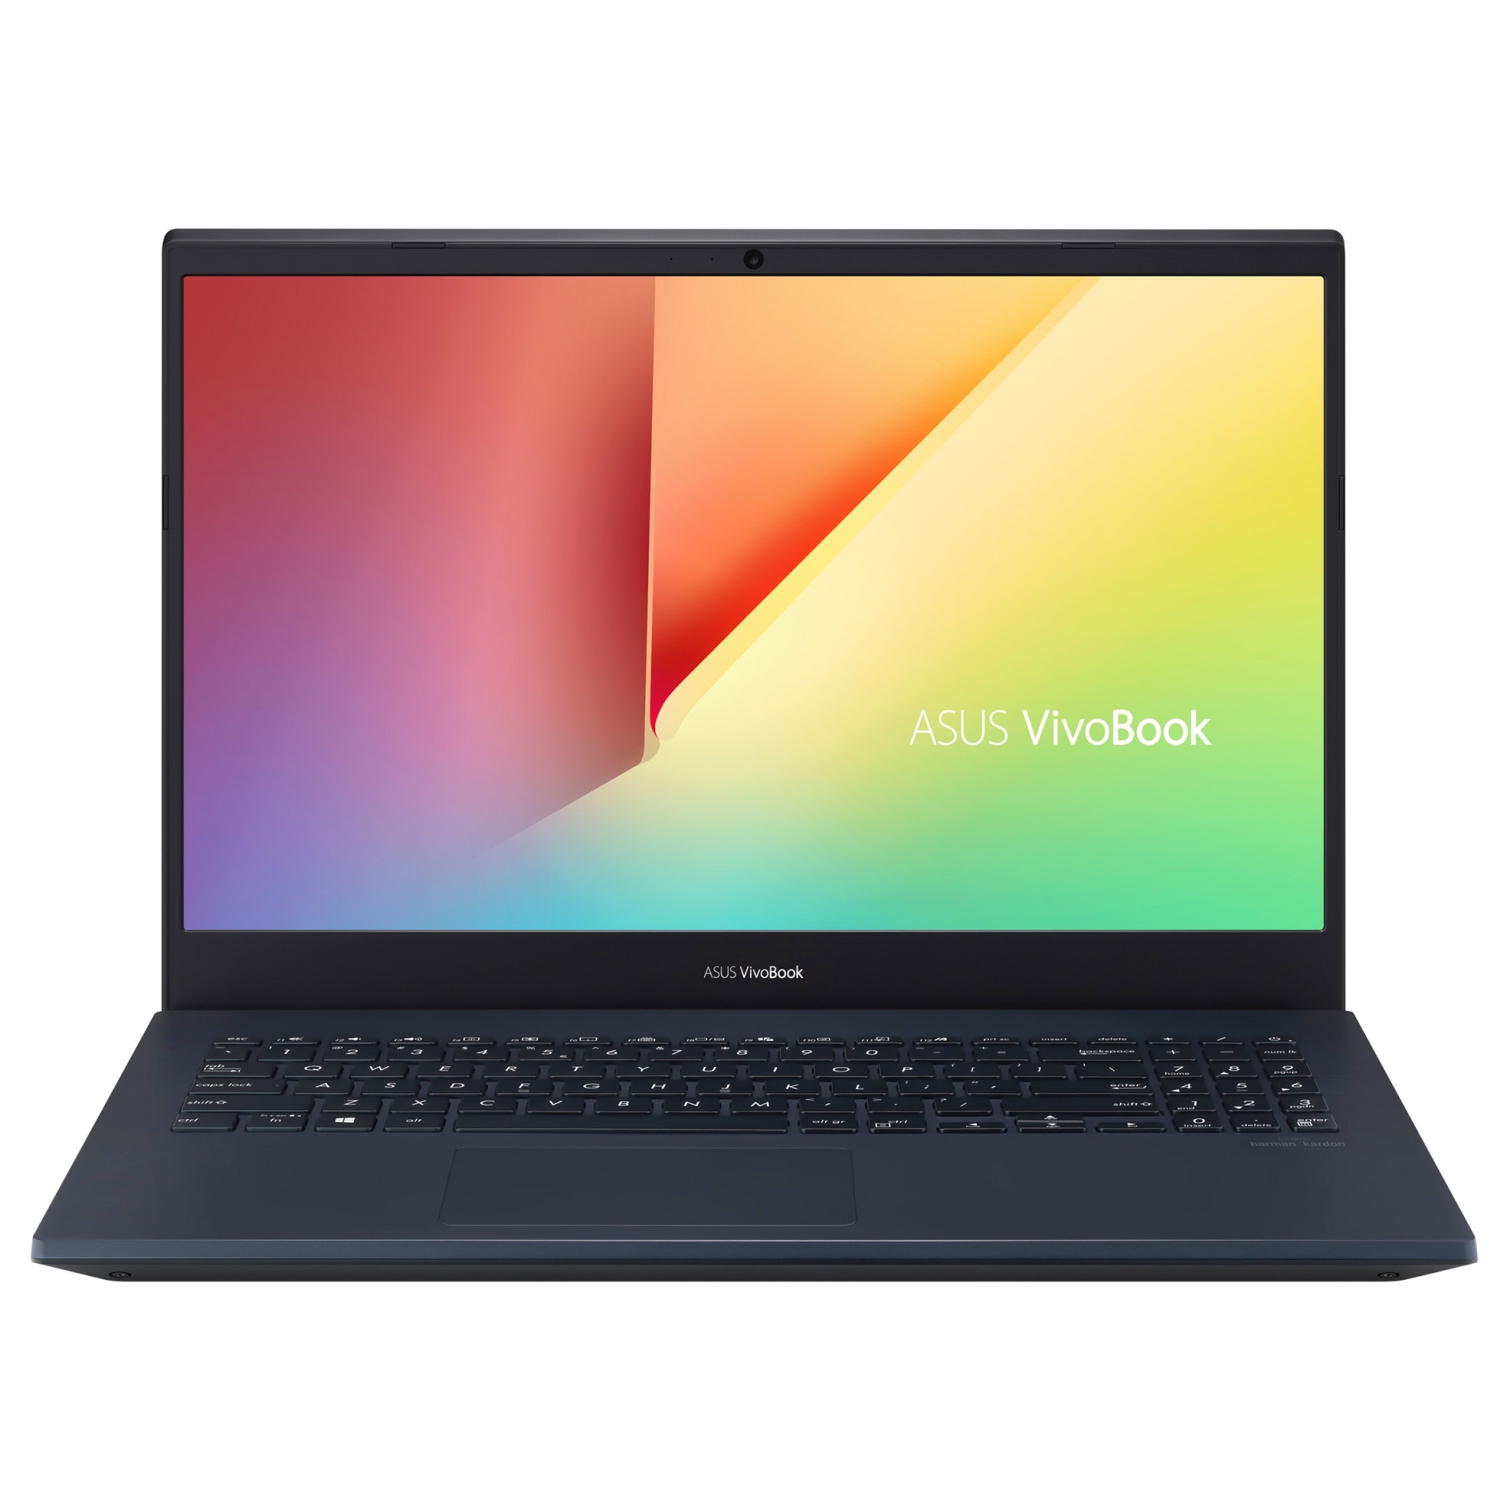 Custom ASUS VivoBook Laptop (Intel i5-10300H, 36GB RAM, 4TB PCIe SSD, NVIDIA GTX 1650, 15.6" Full HD (1920x1080), Win 10 Pro)